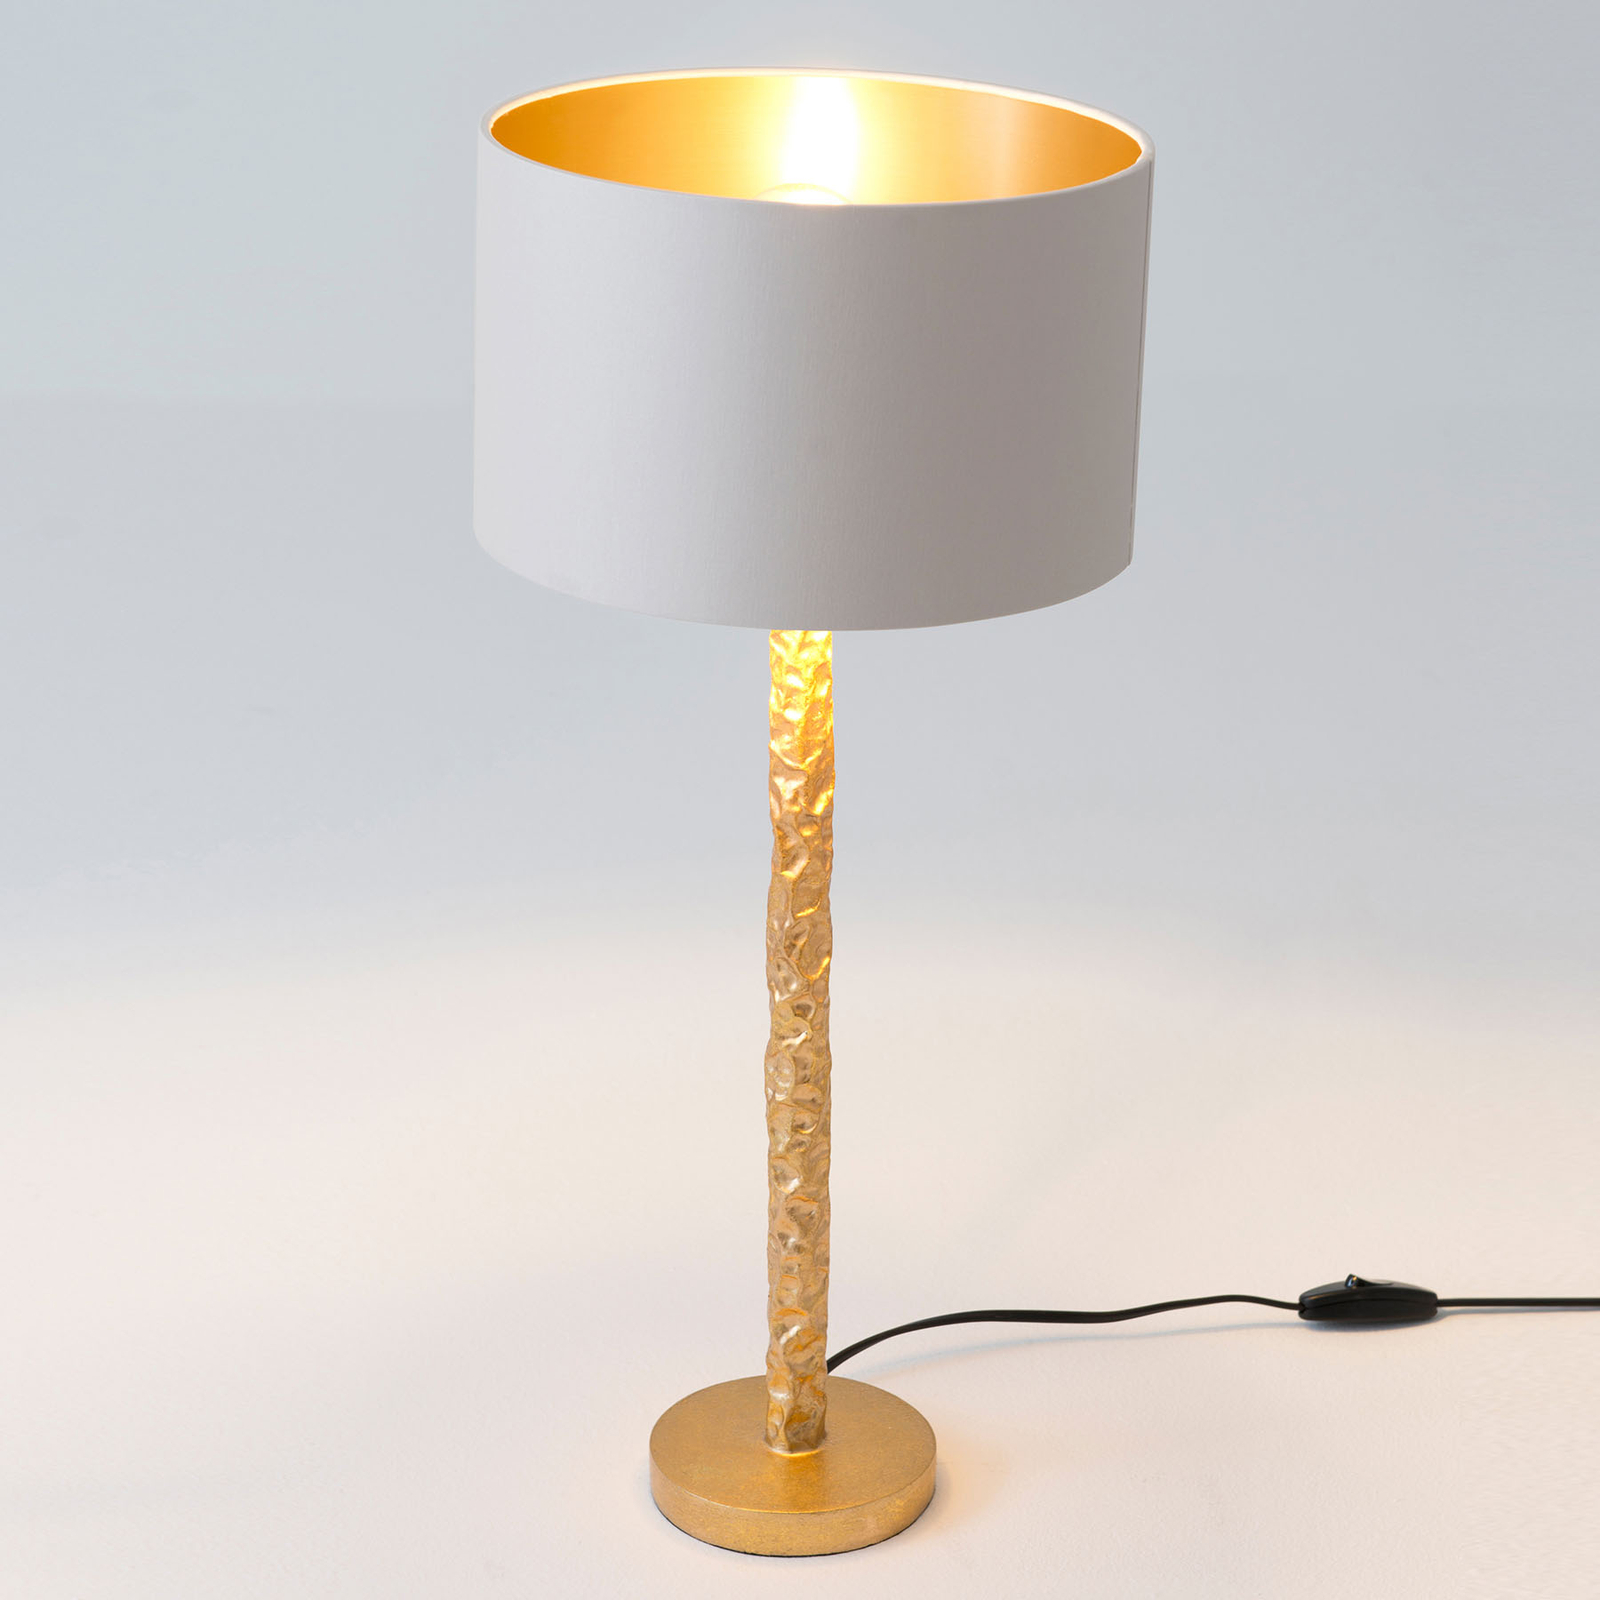 Cancelliere Rotonda table lamp white/gold 57 cm